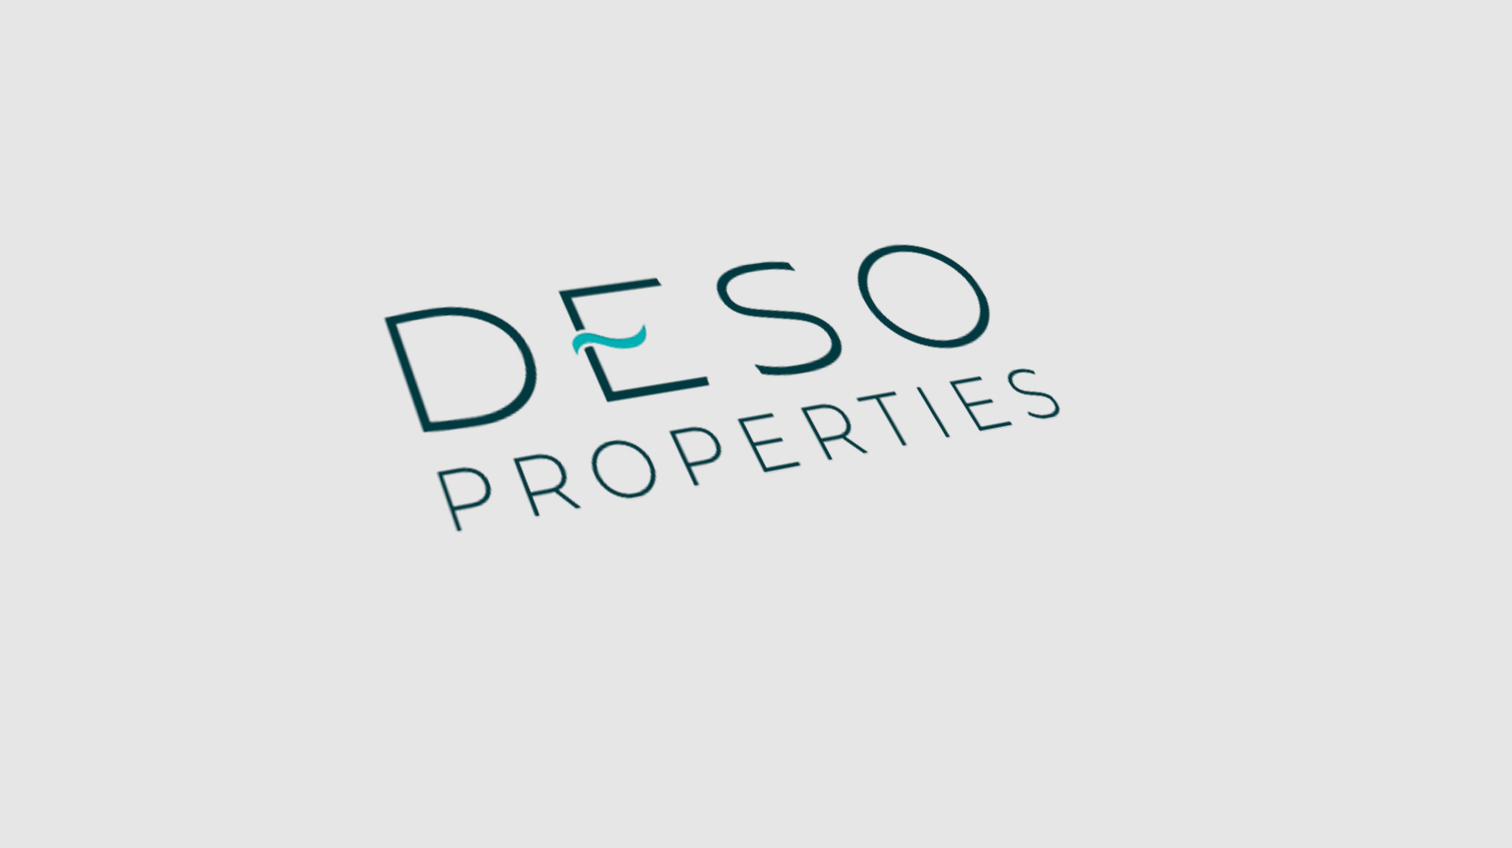 Dark version of Deso Properties logo against a white background - White Canvas Design